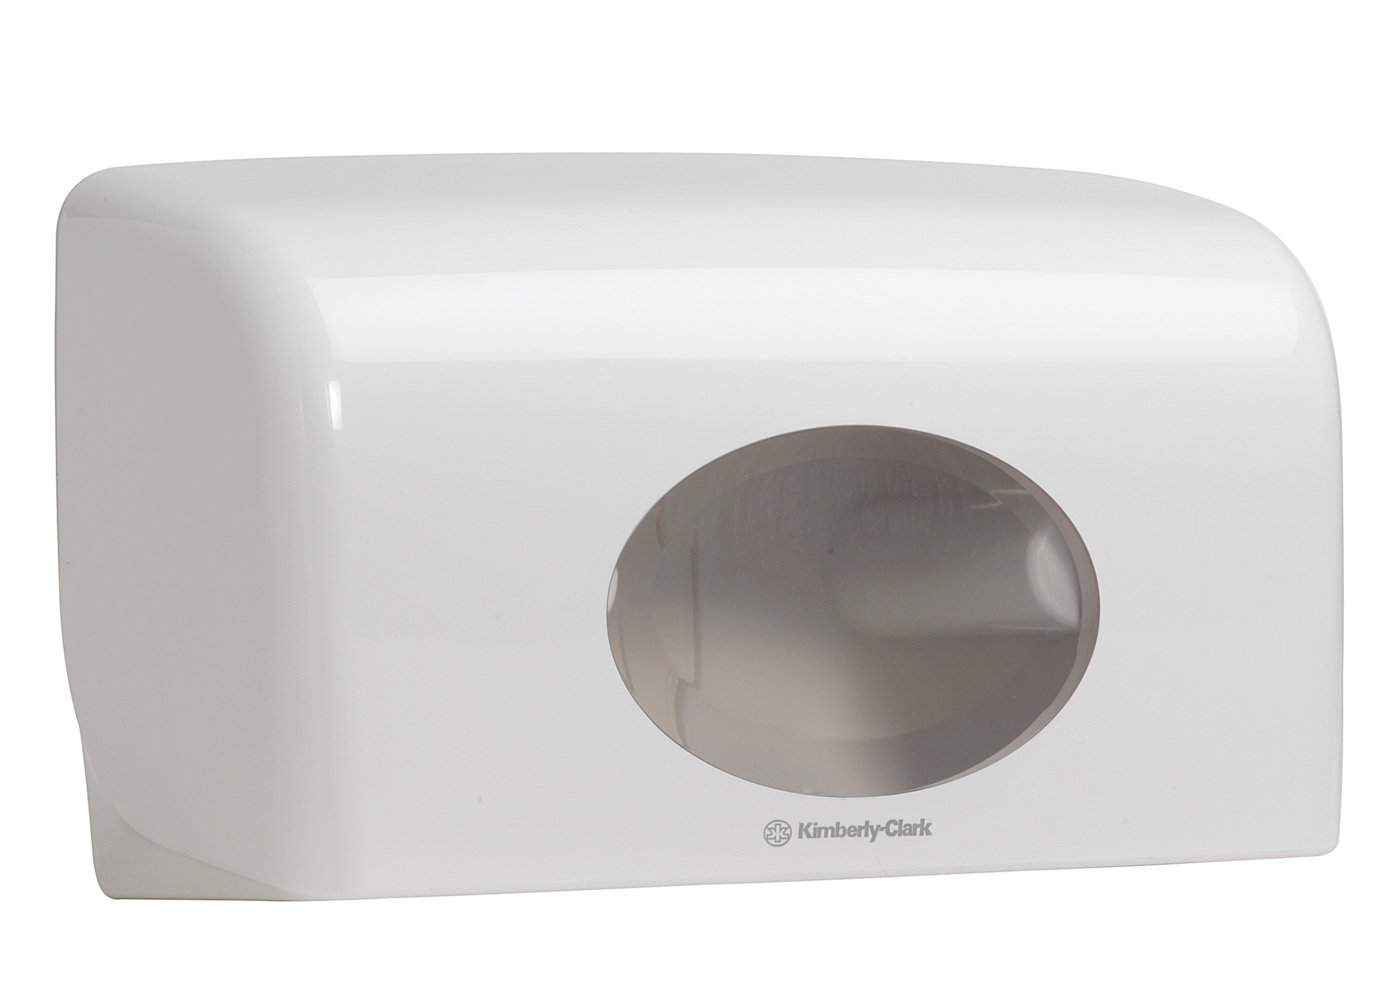 Aquarius™ Small Roll Double Toilet Roll Dispenser 6992 – 1 x White Toilet Paper Dispenser - 6992